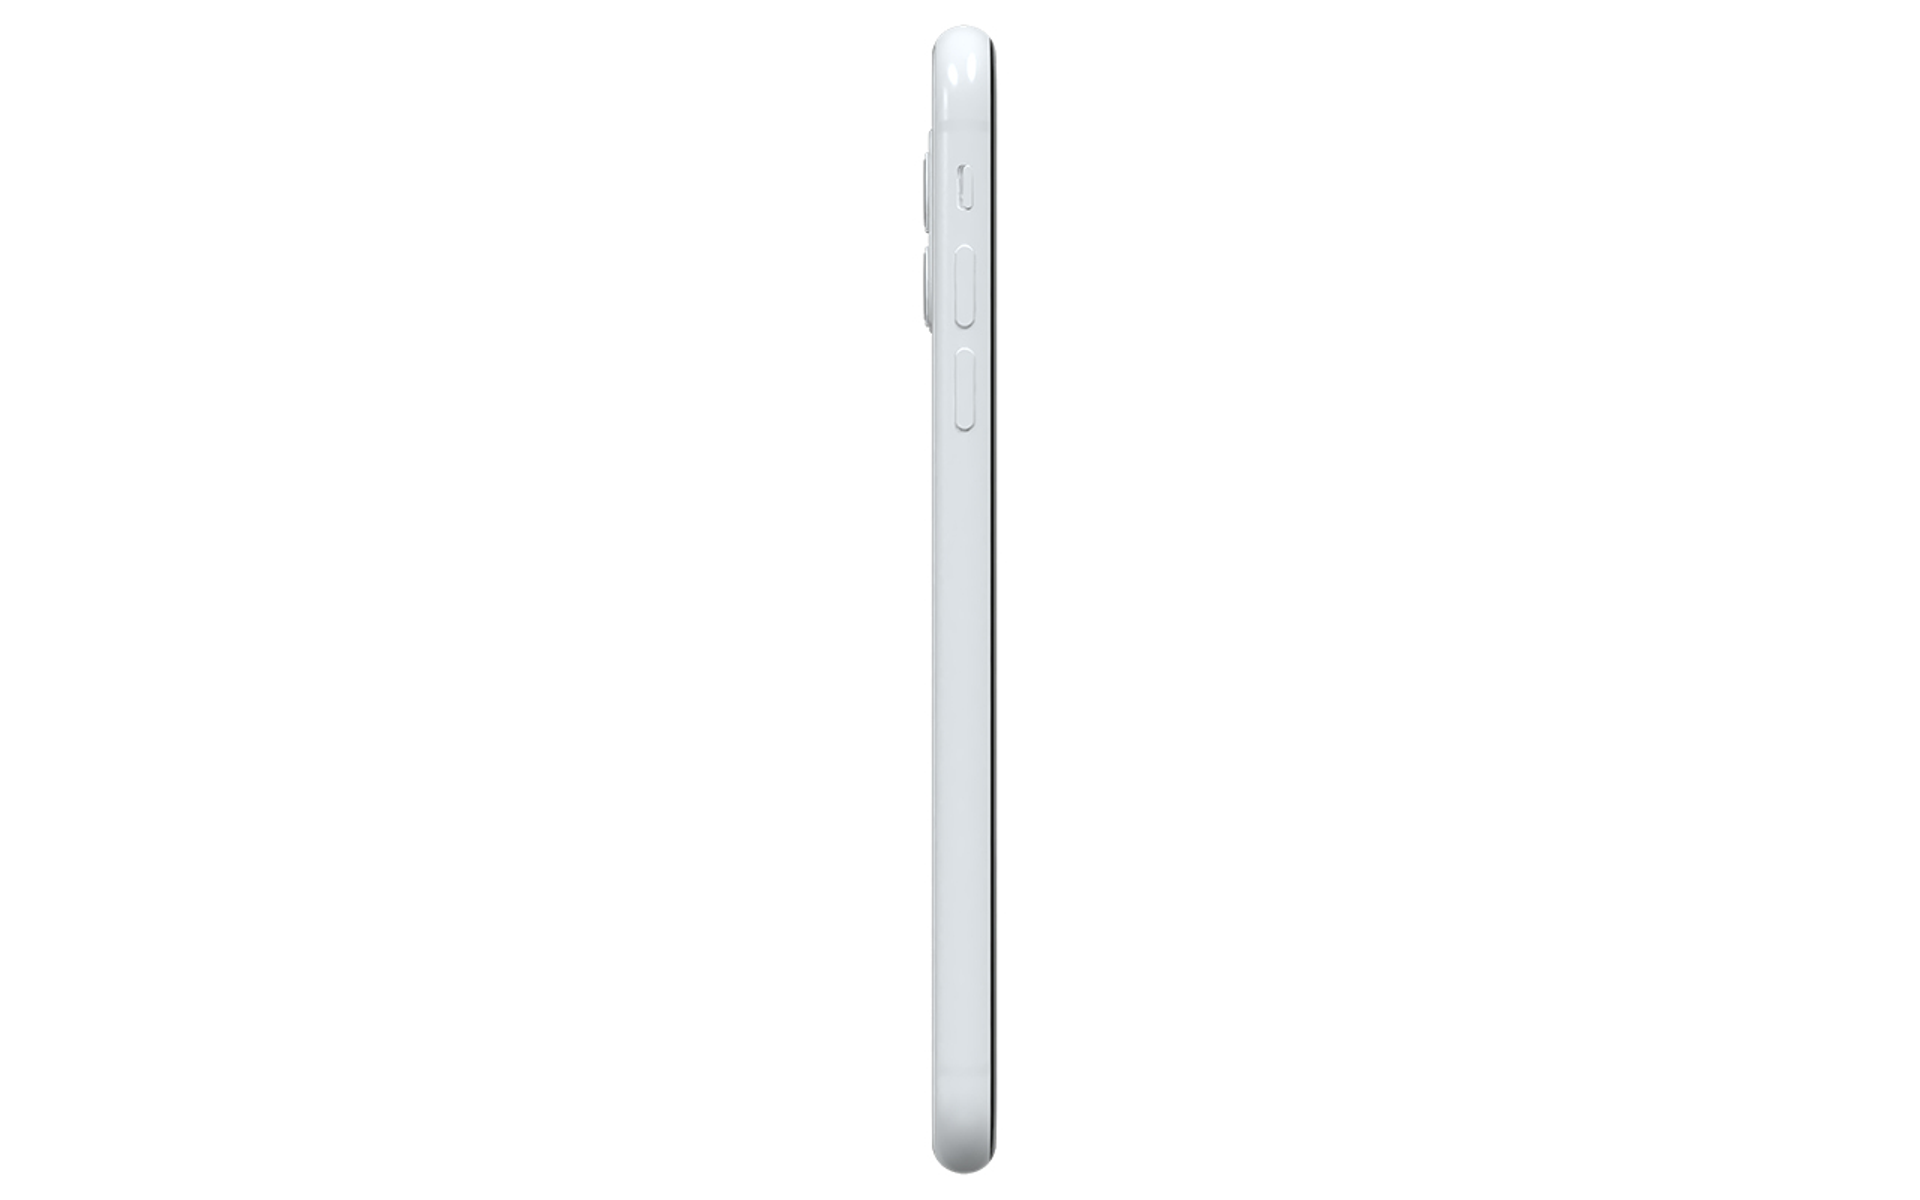 APPLE REFURBISHED(*) iPhone 11 White Dual GB SIM 64